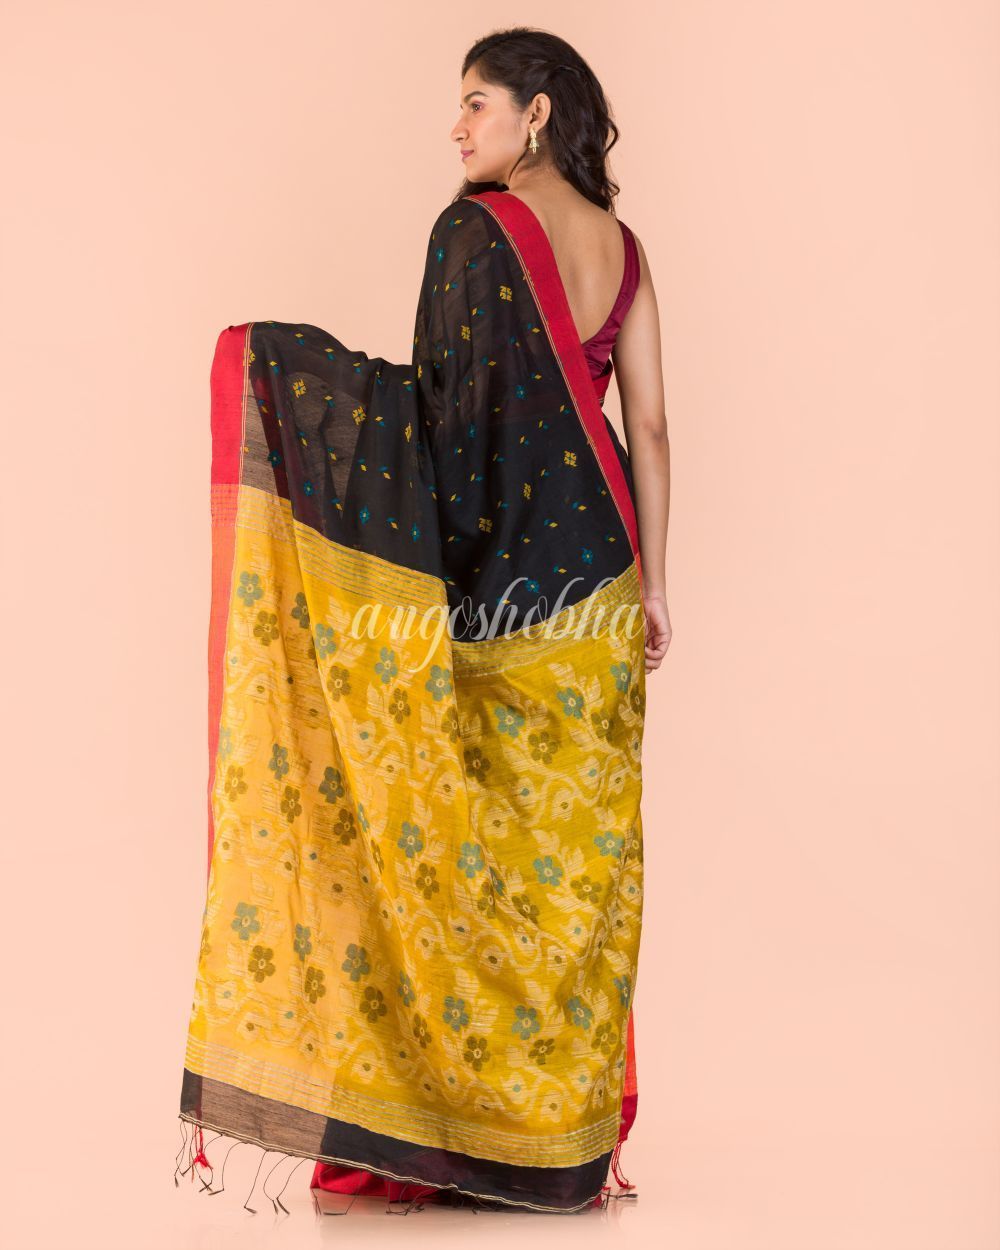 Women's Black Blended Cotton Jamdani Saree - Angoshobha